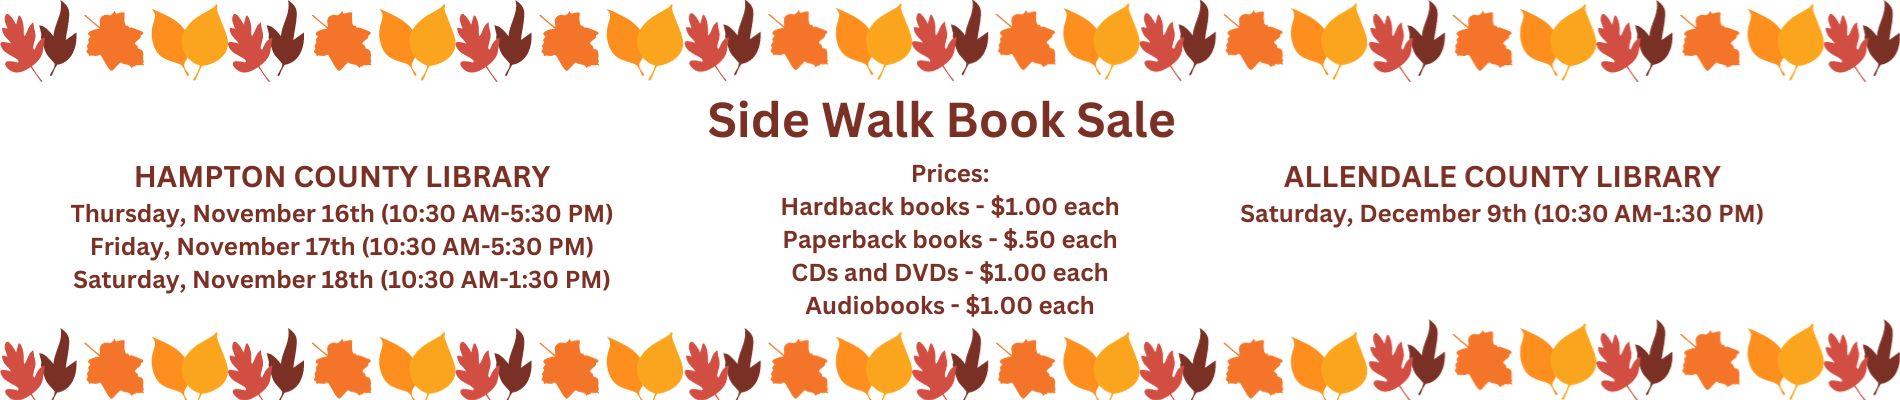 Hampton County Library Side Walk Book Sale